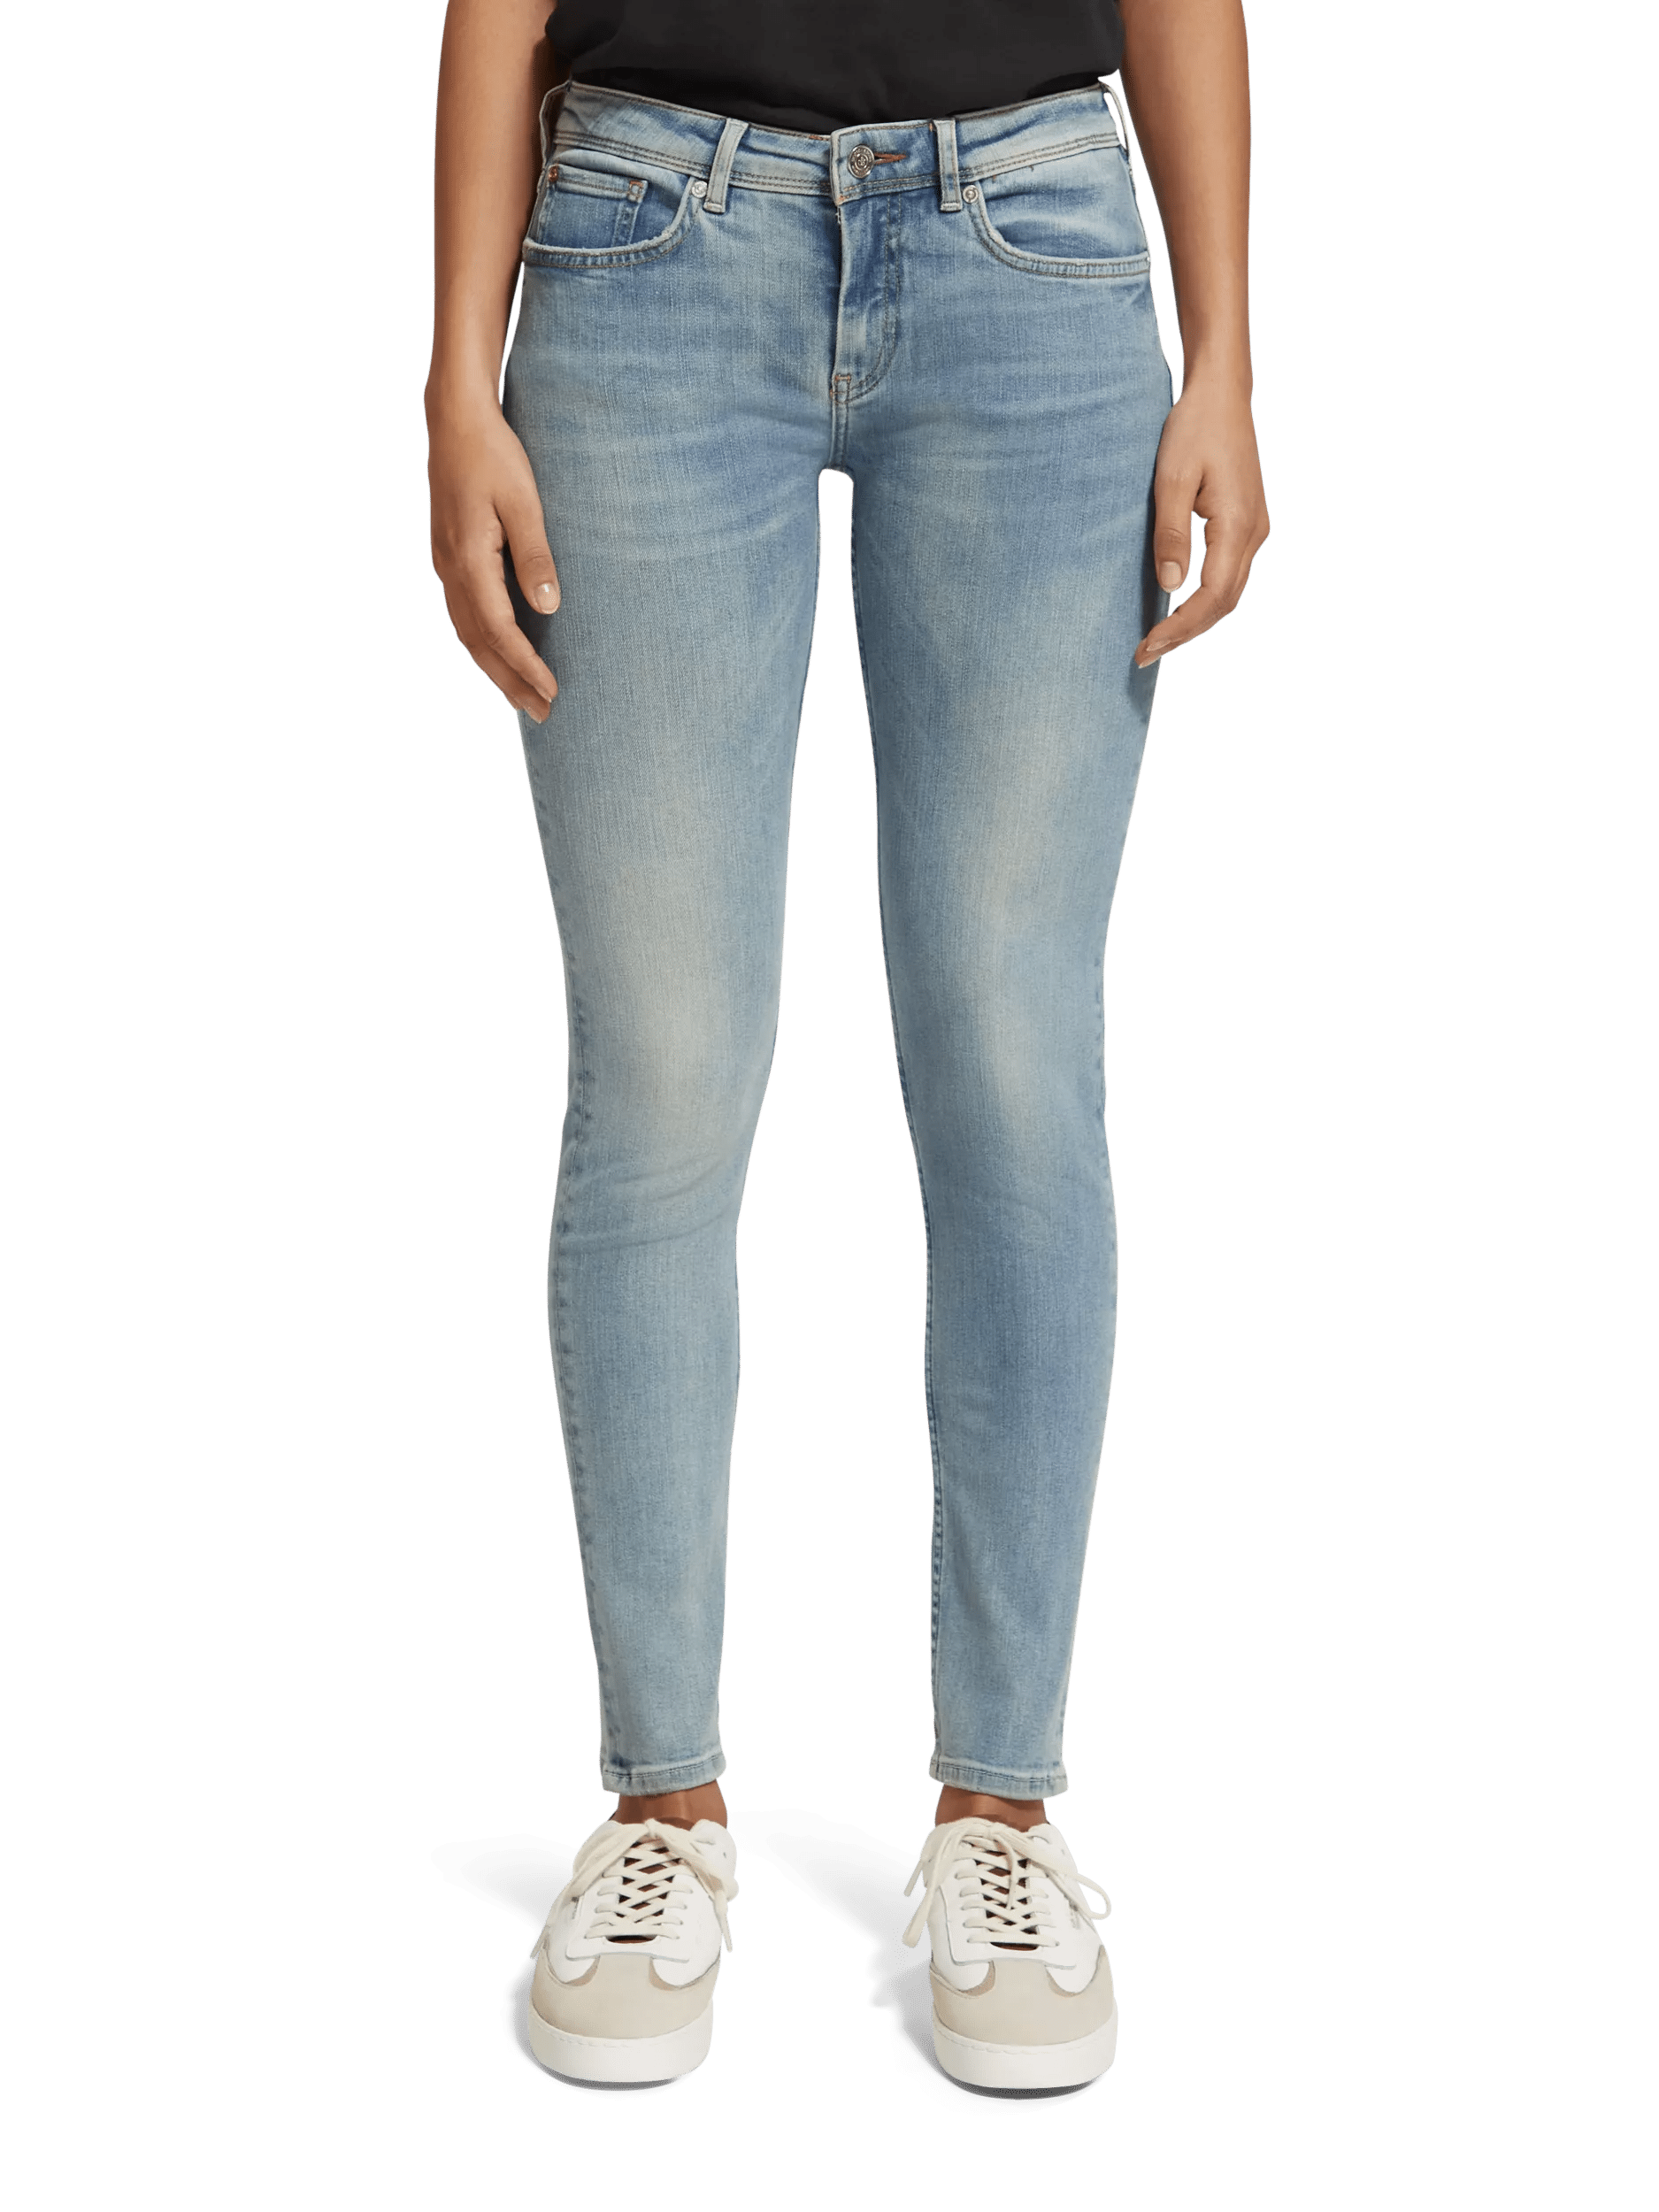 Scotch & Soda La Bohemienne mid-rise skinny fit jeans FIT-CRP